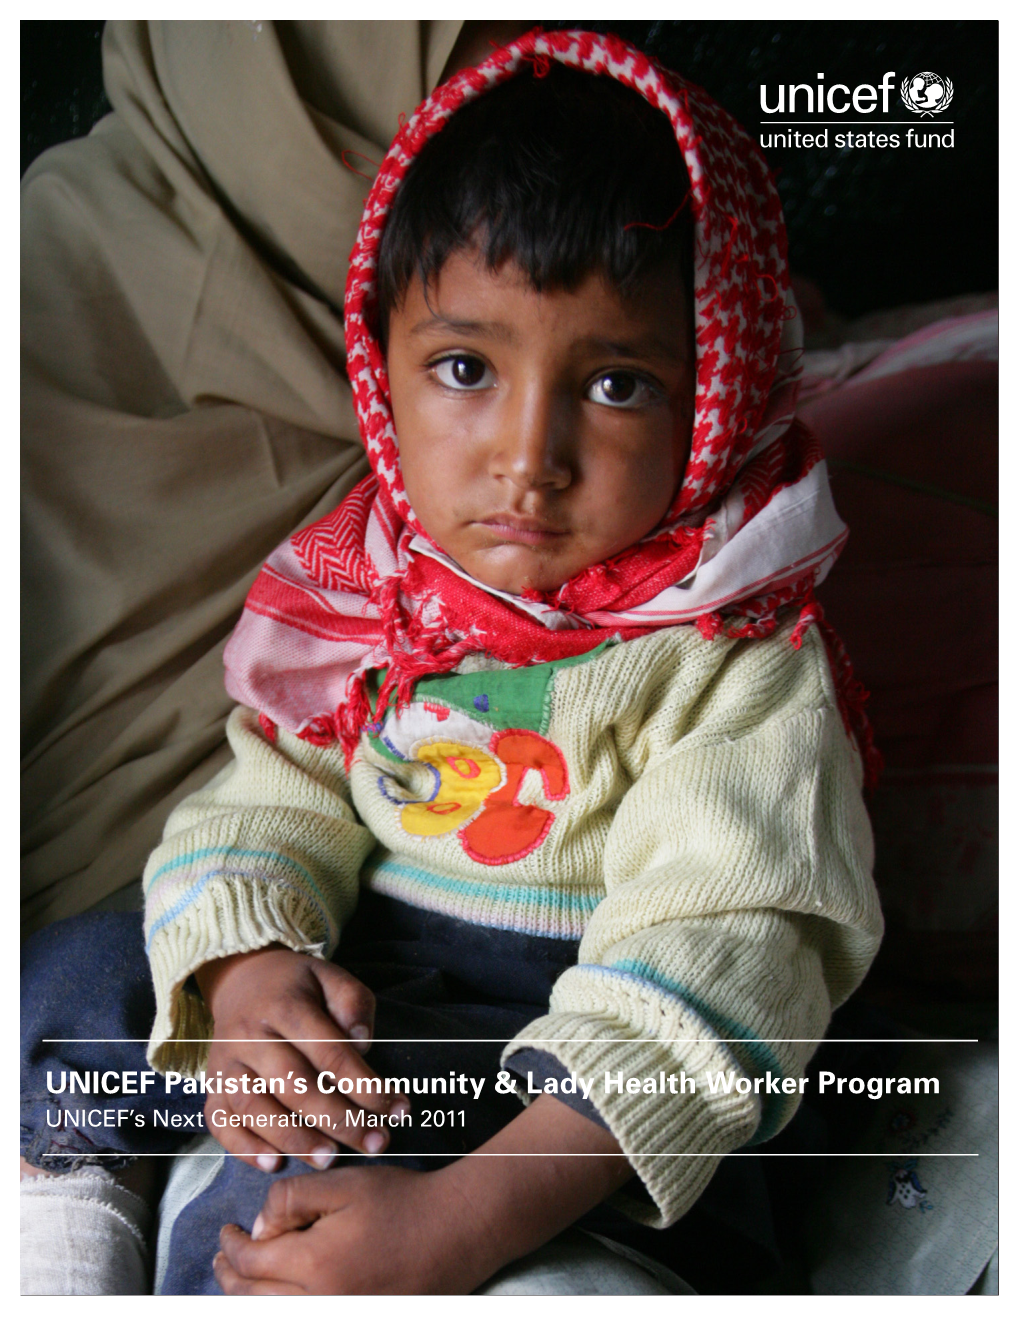 UNICEF Pakistan's Community & Lady Health Worker Program